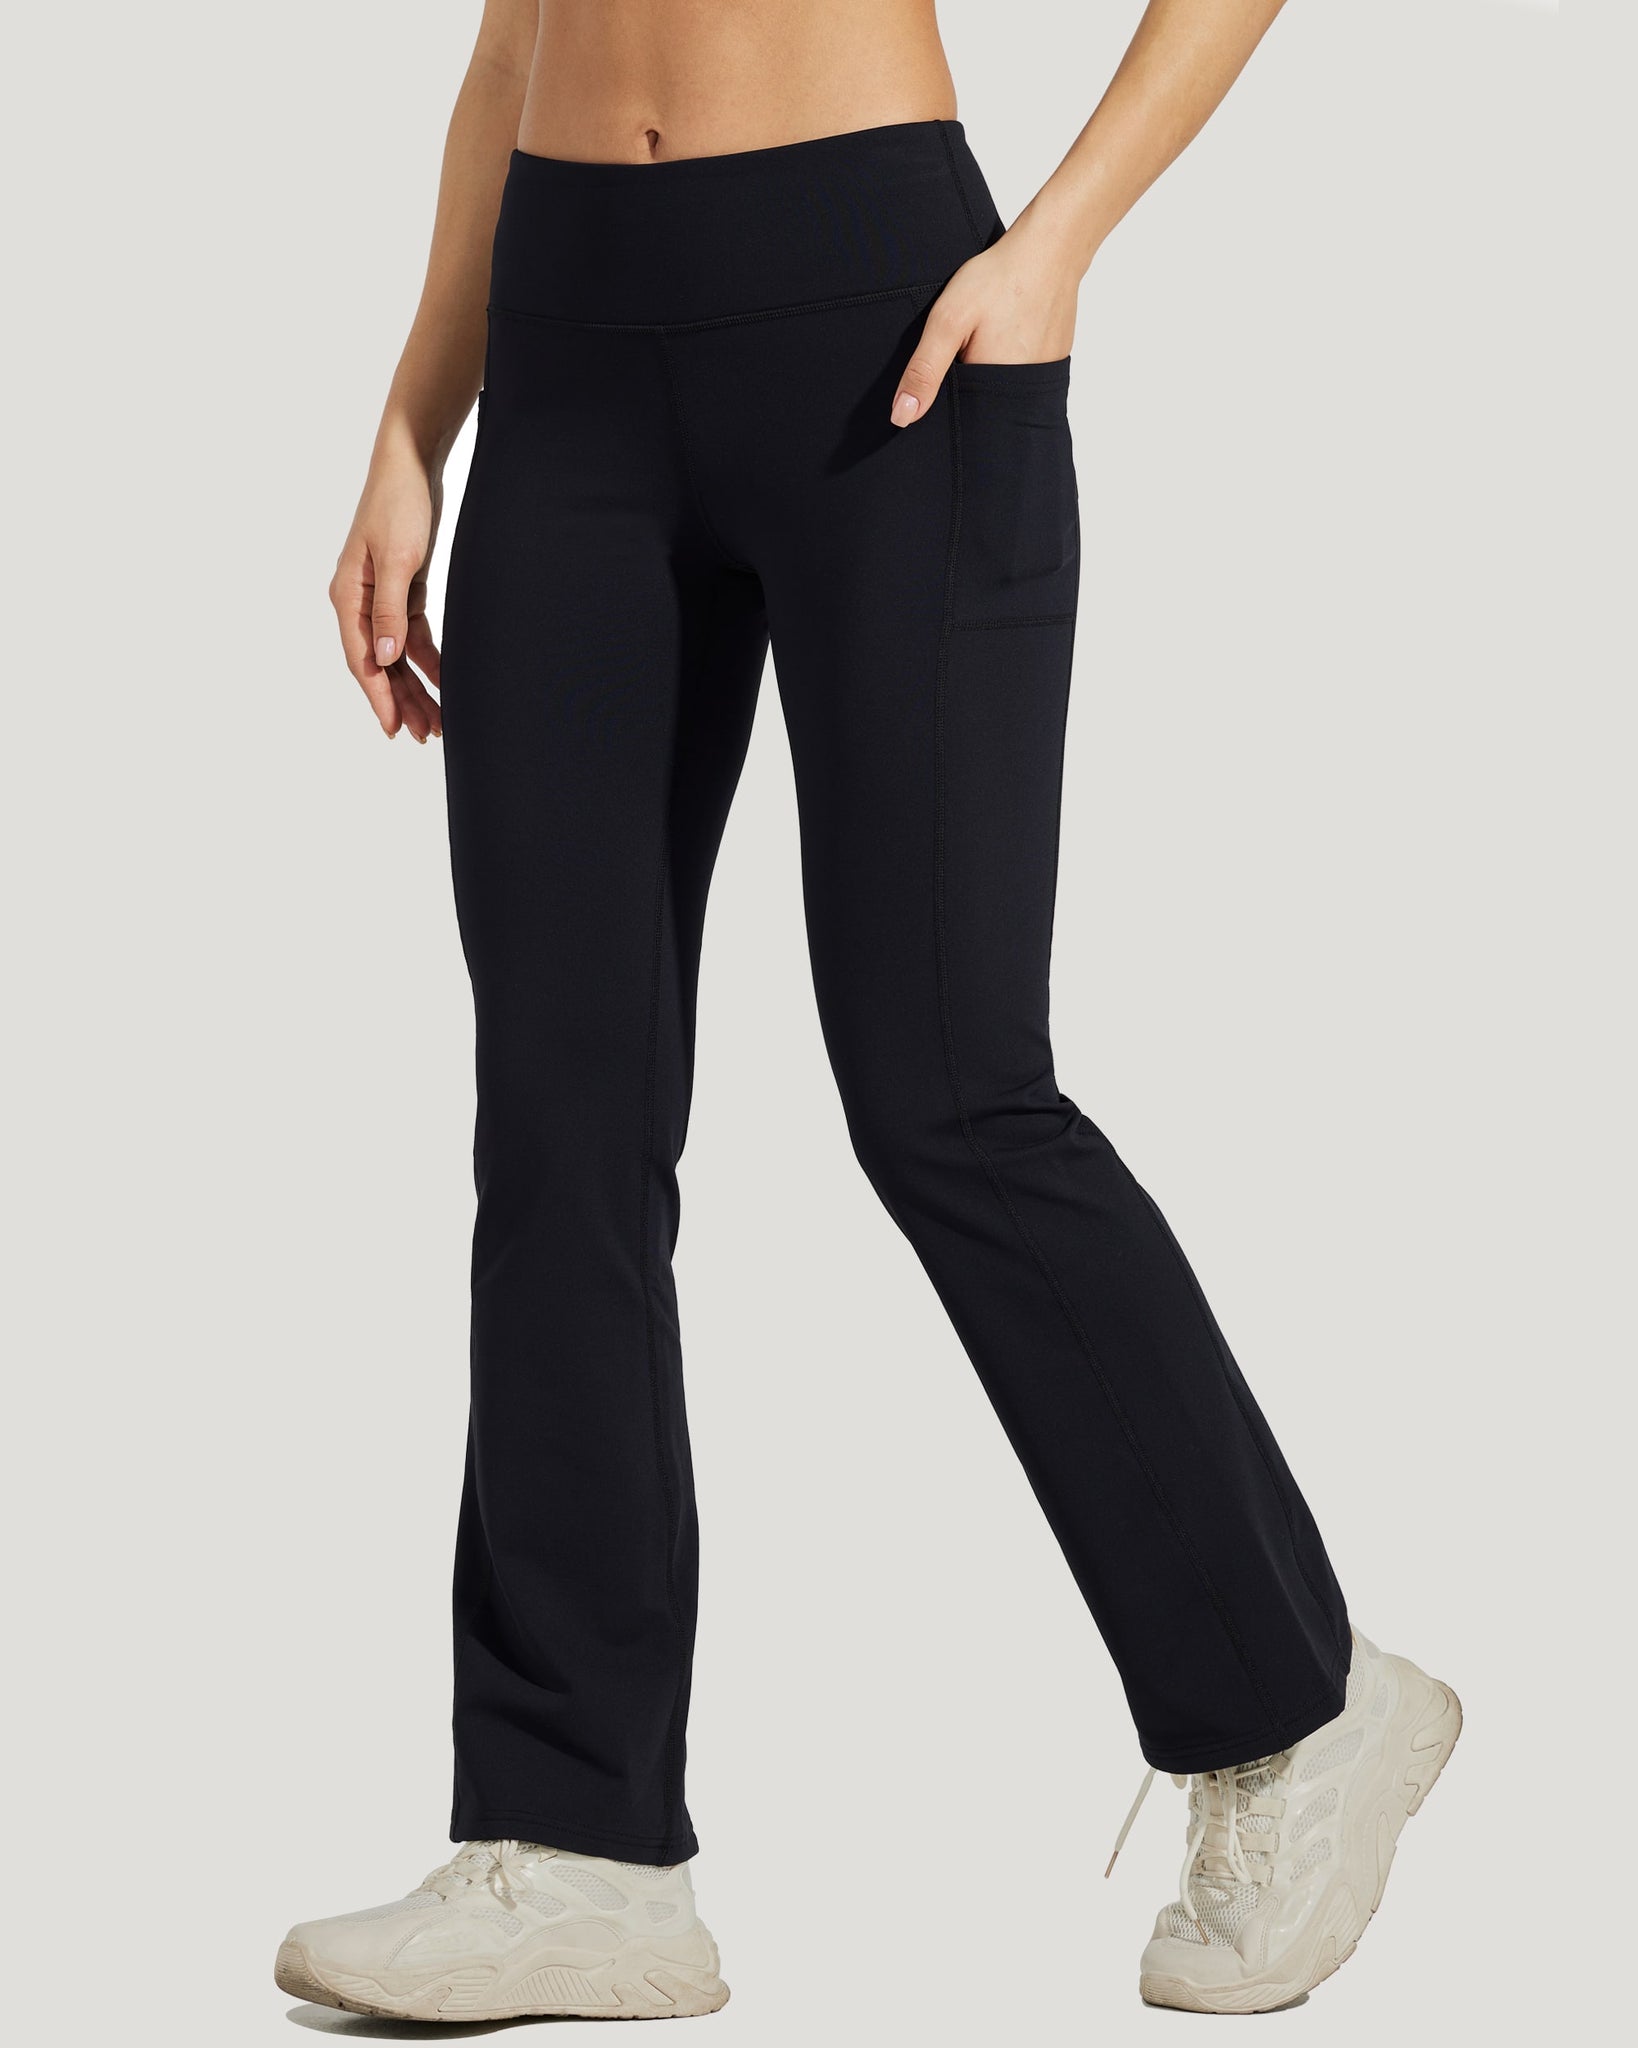 Women's Fleece Lined Bootcut Yoga Pants_Black_model4